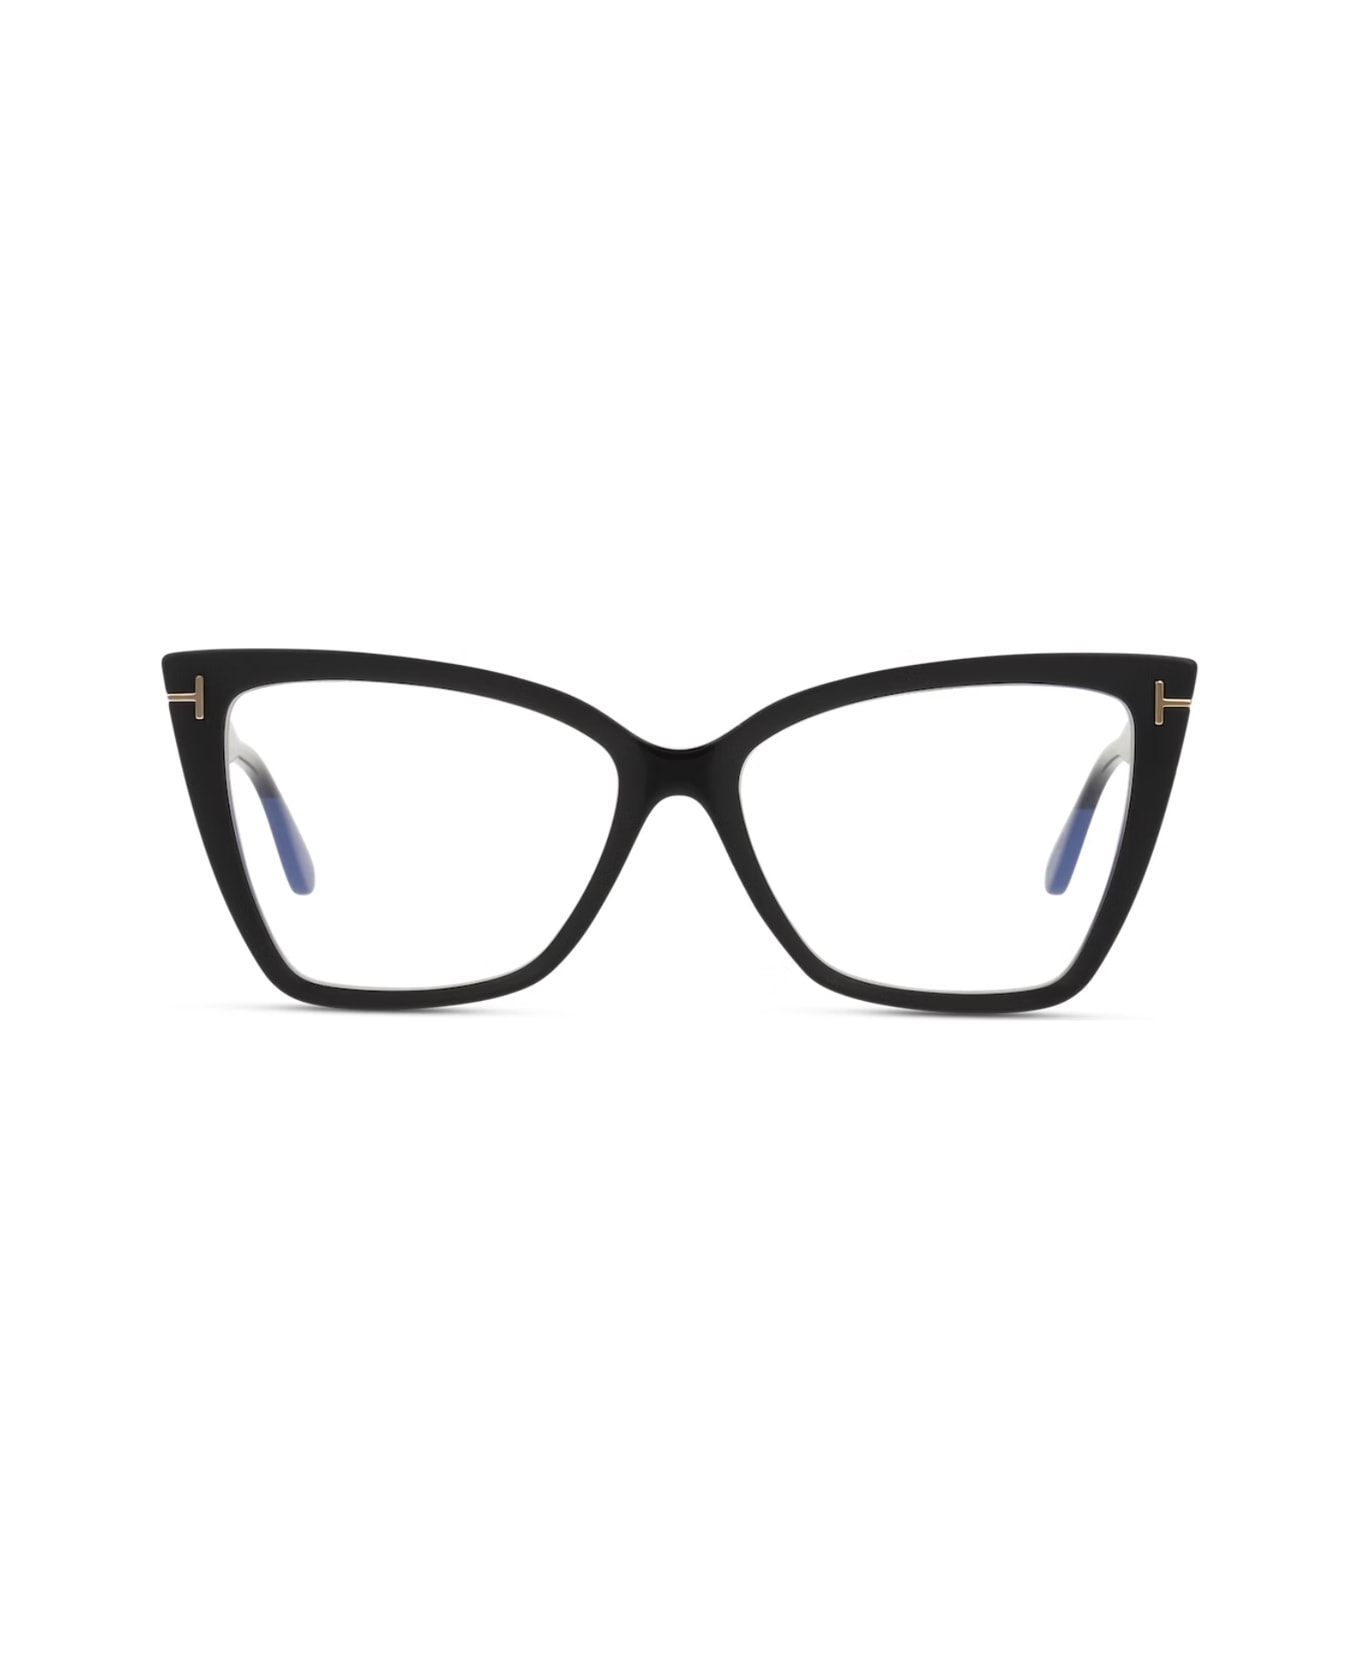 Tom Ford Eyewear Ft5844 Glasses - Nero